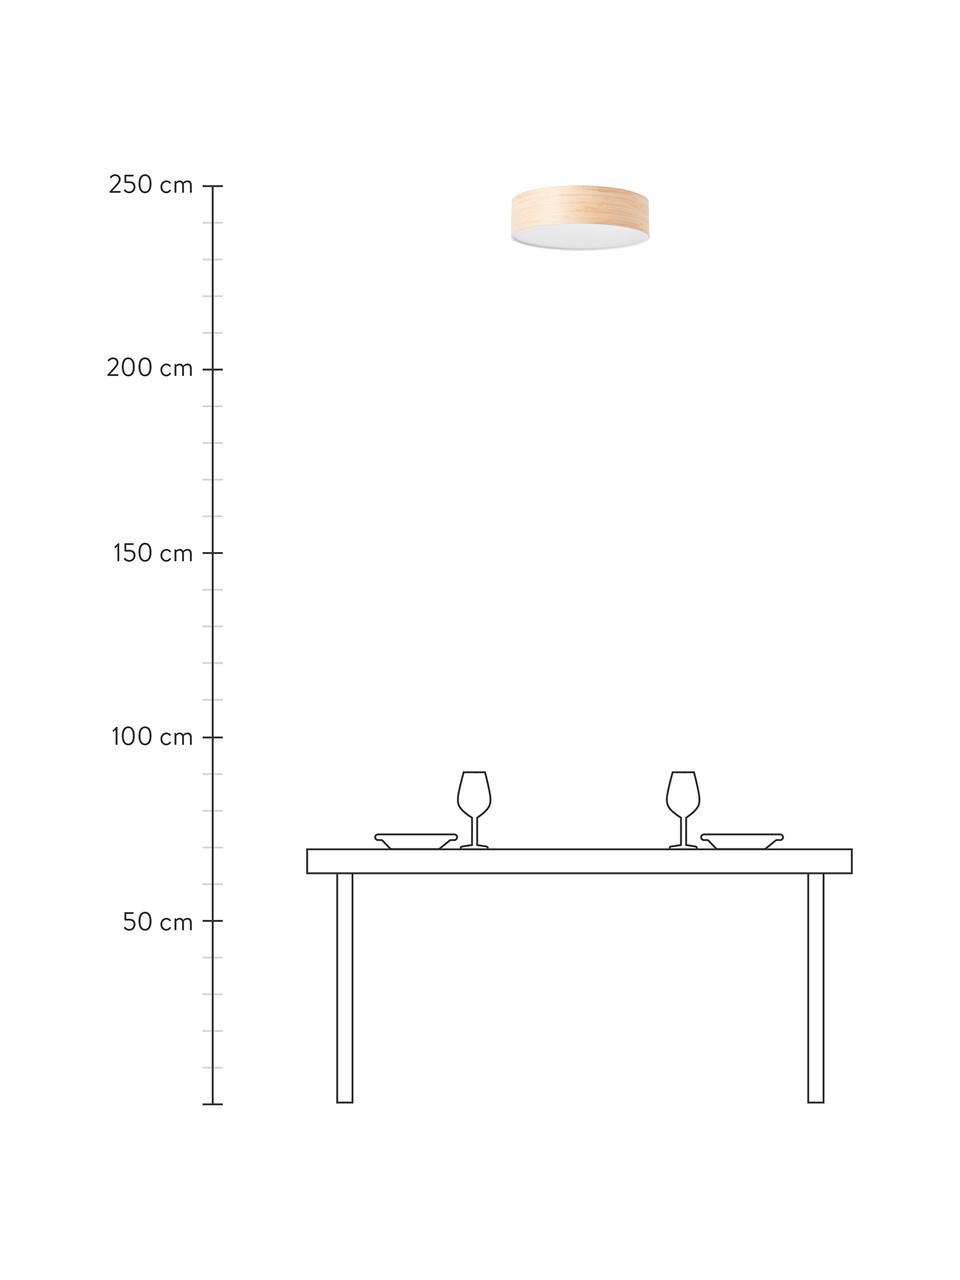 Plafondlamp Romm van hout, Lampenkap: hout, Diffuser: kunststof, Hout licht/wit, Ø 38 x H 10 cm